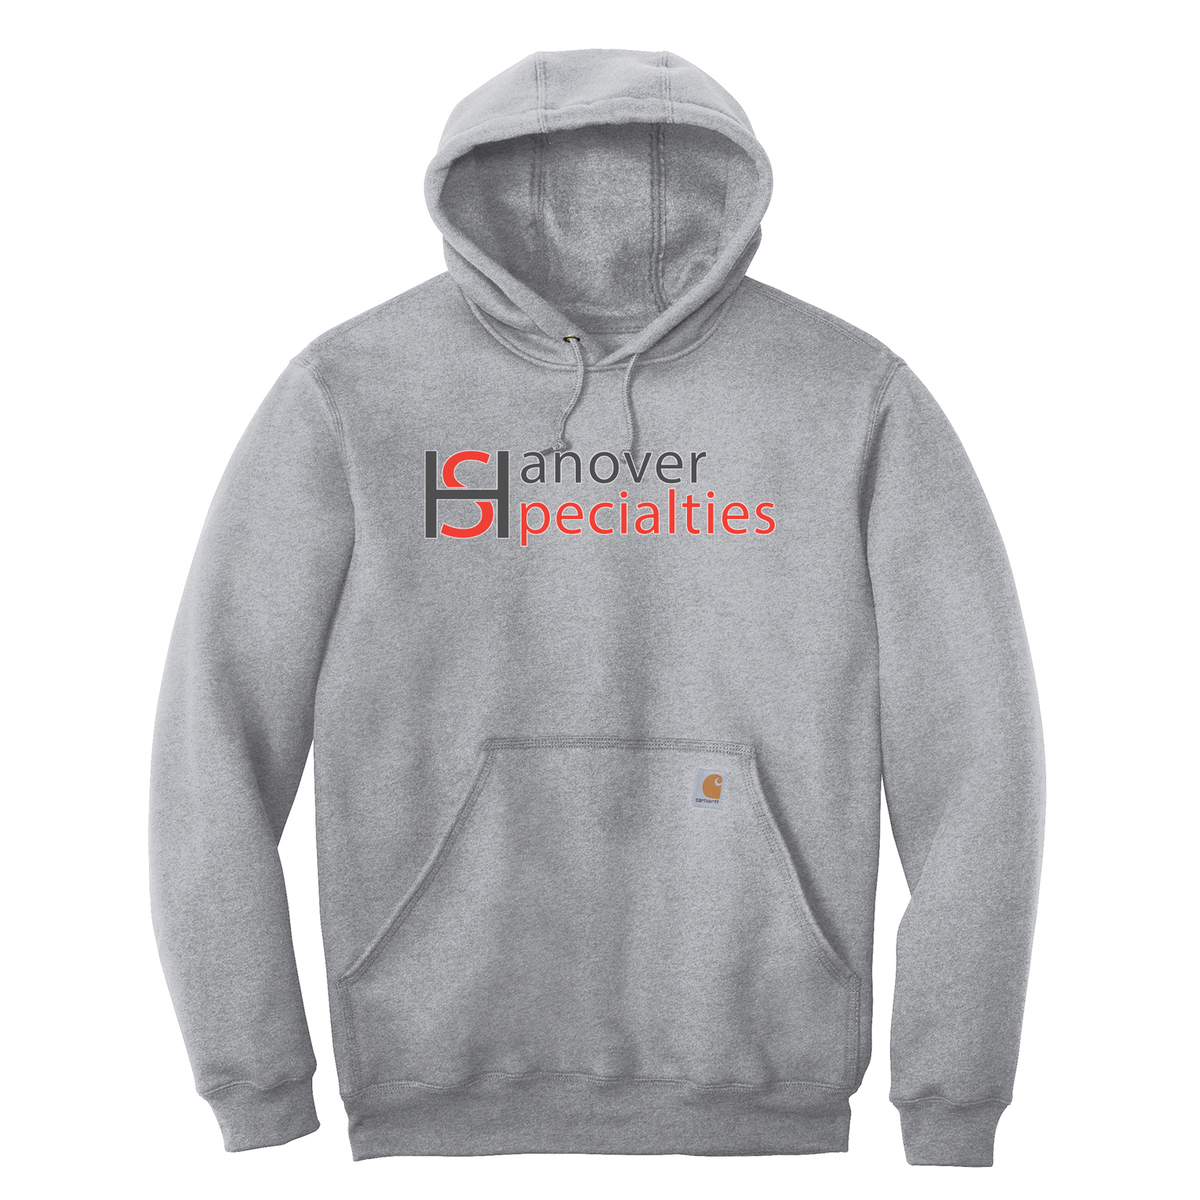 Hanover Specialties Carhartt Midweight Hooded Sweatshirt